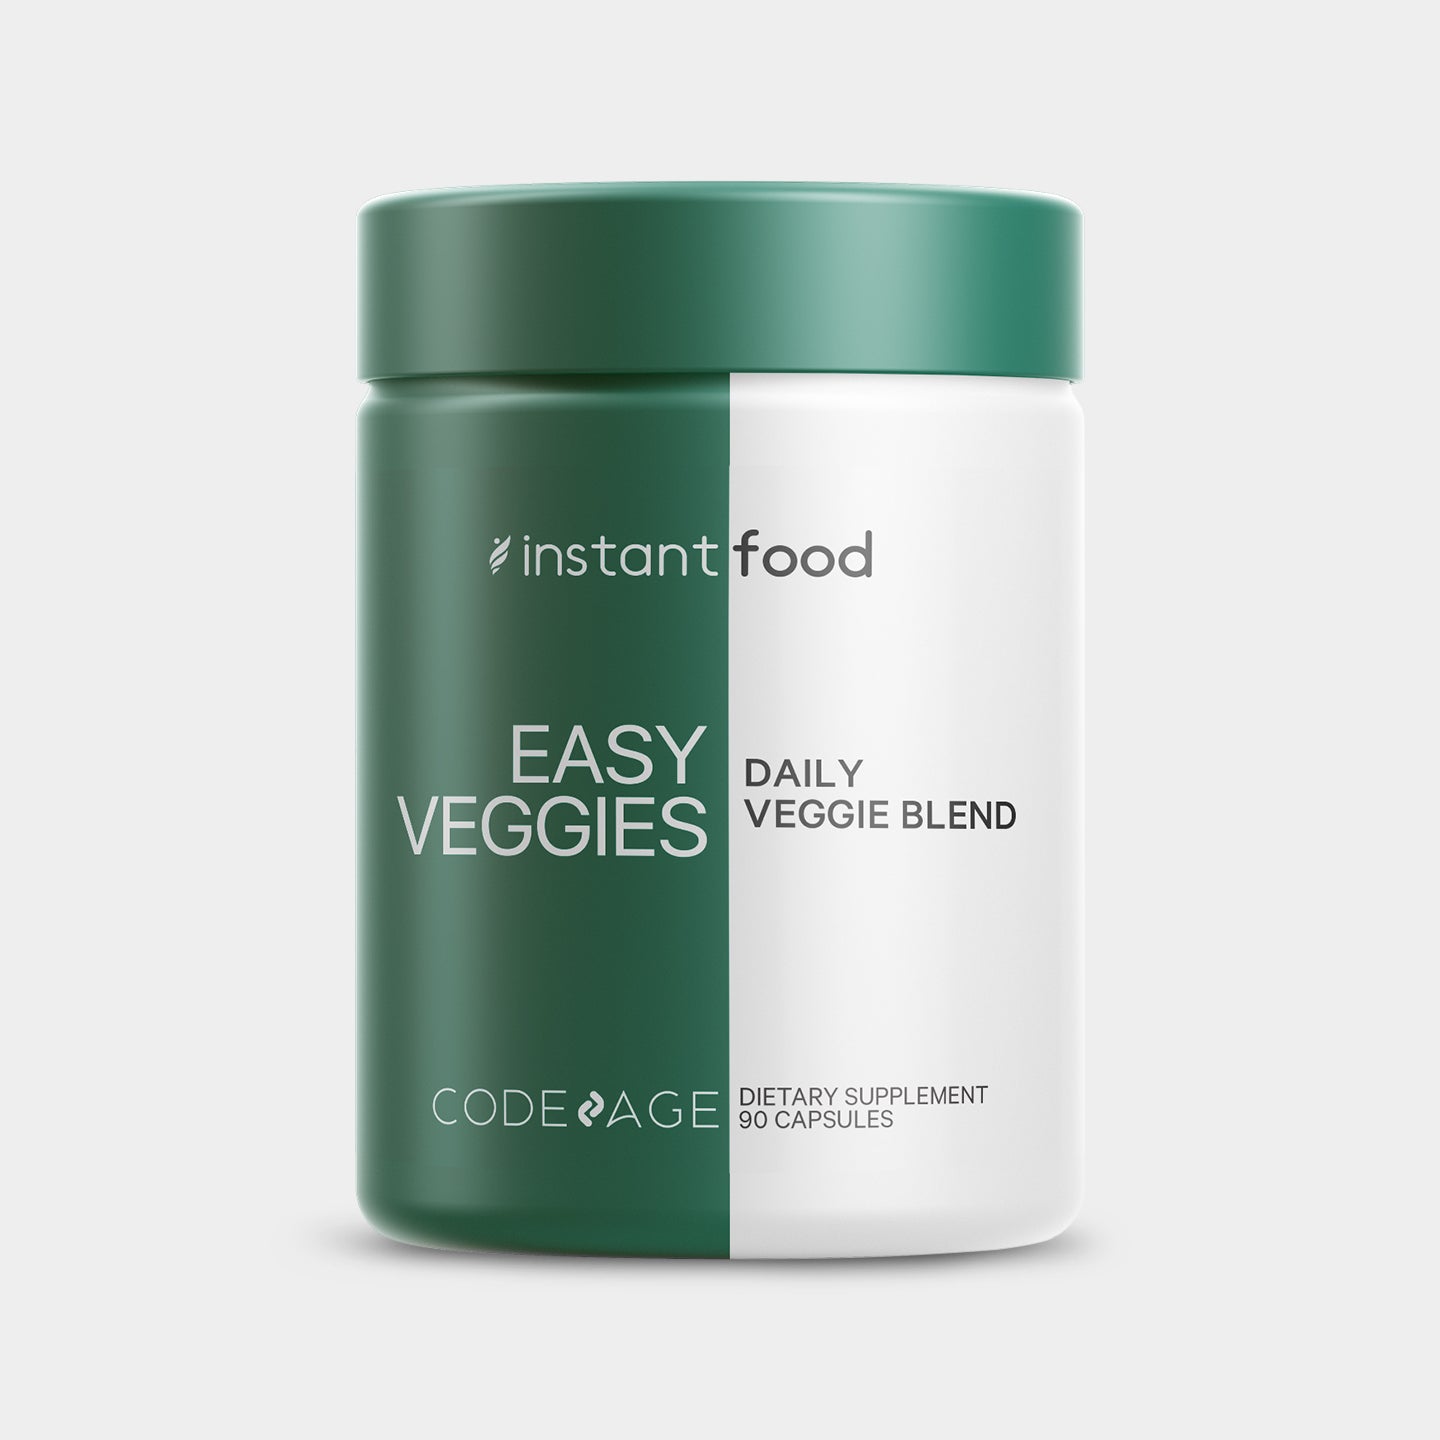 Codeage Instantfood Easy Veggies Daily Veggie Blend Supplement Main